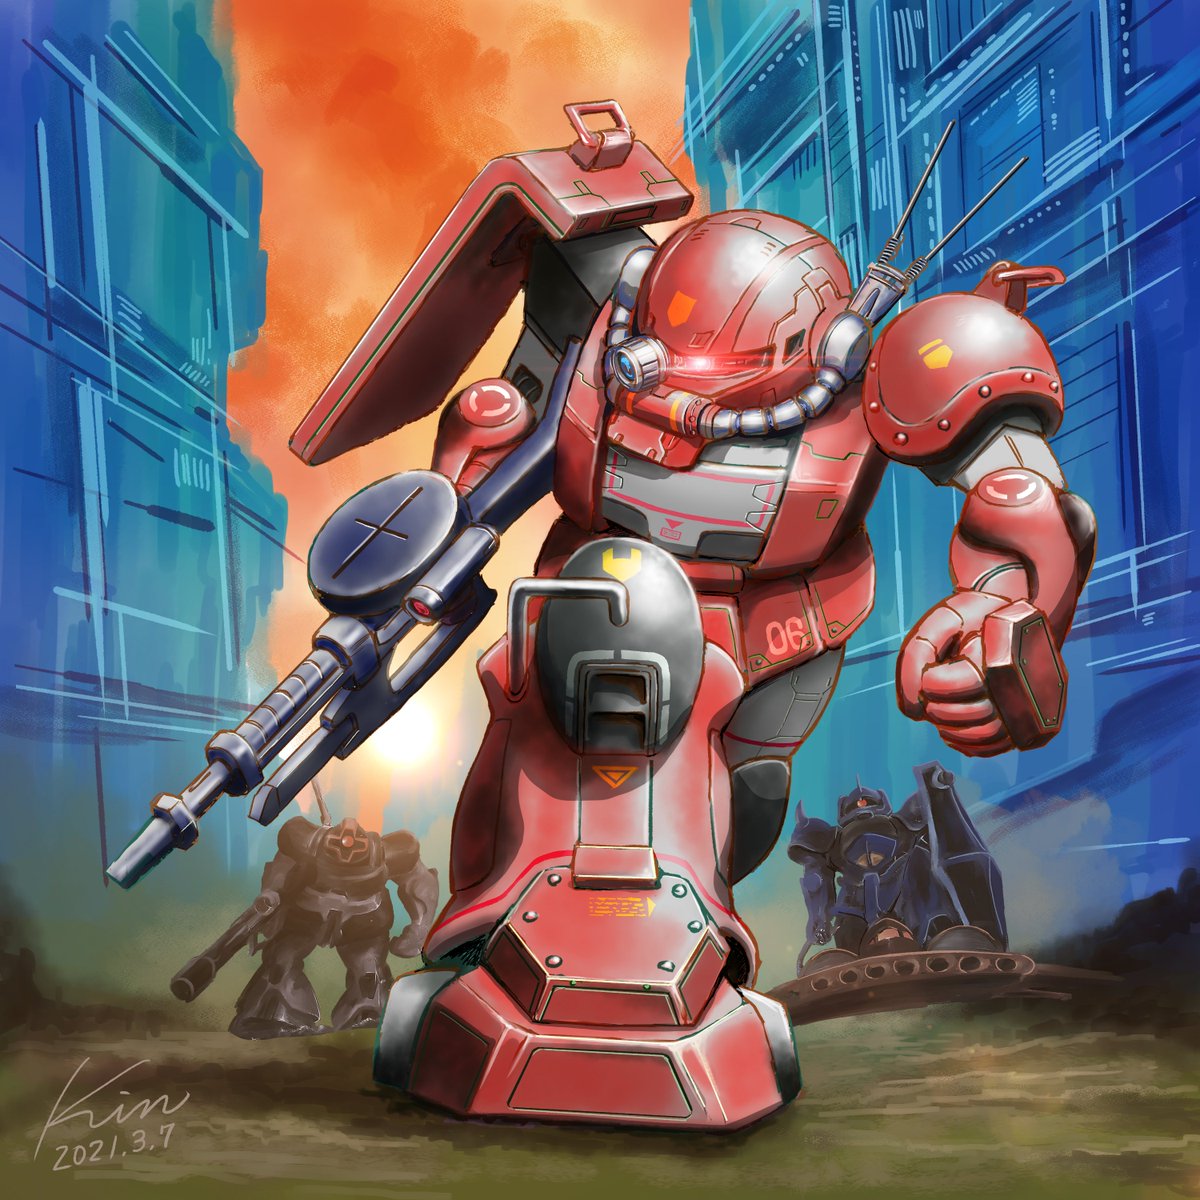 mecha robot weapon gun science fiction no humans holding weapon  illustration images